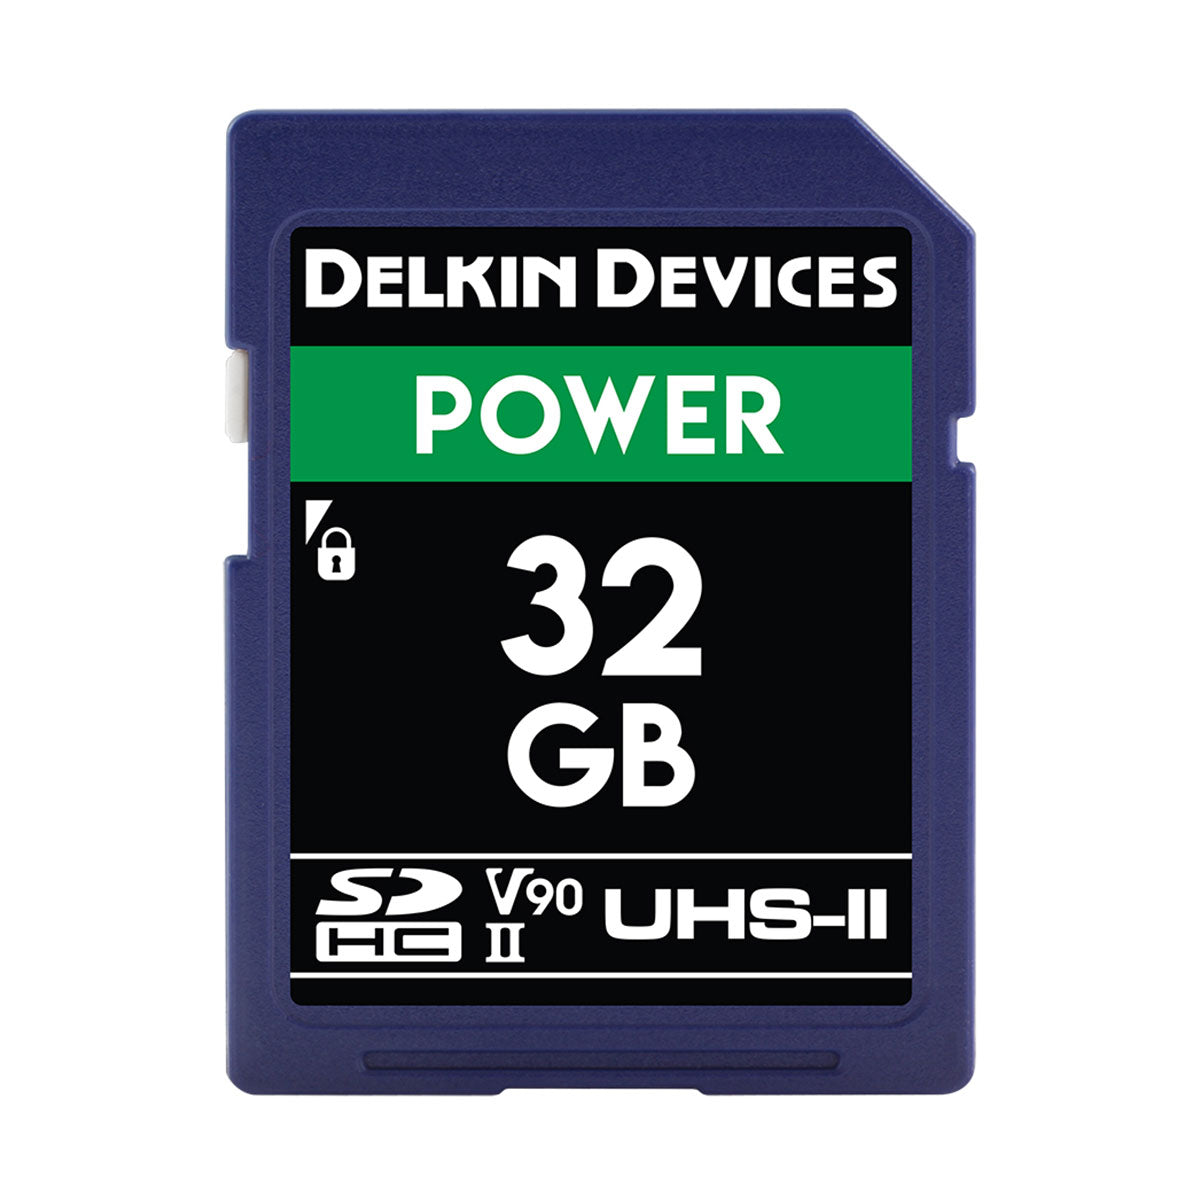 Delkin POWER 32GB UHS-II SDXC (V90) Memory Card